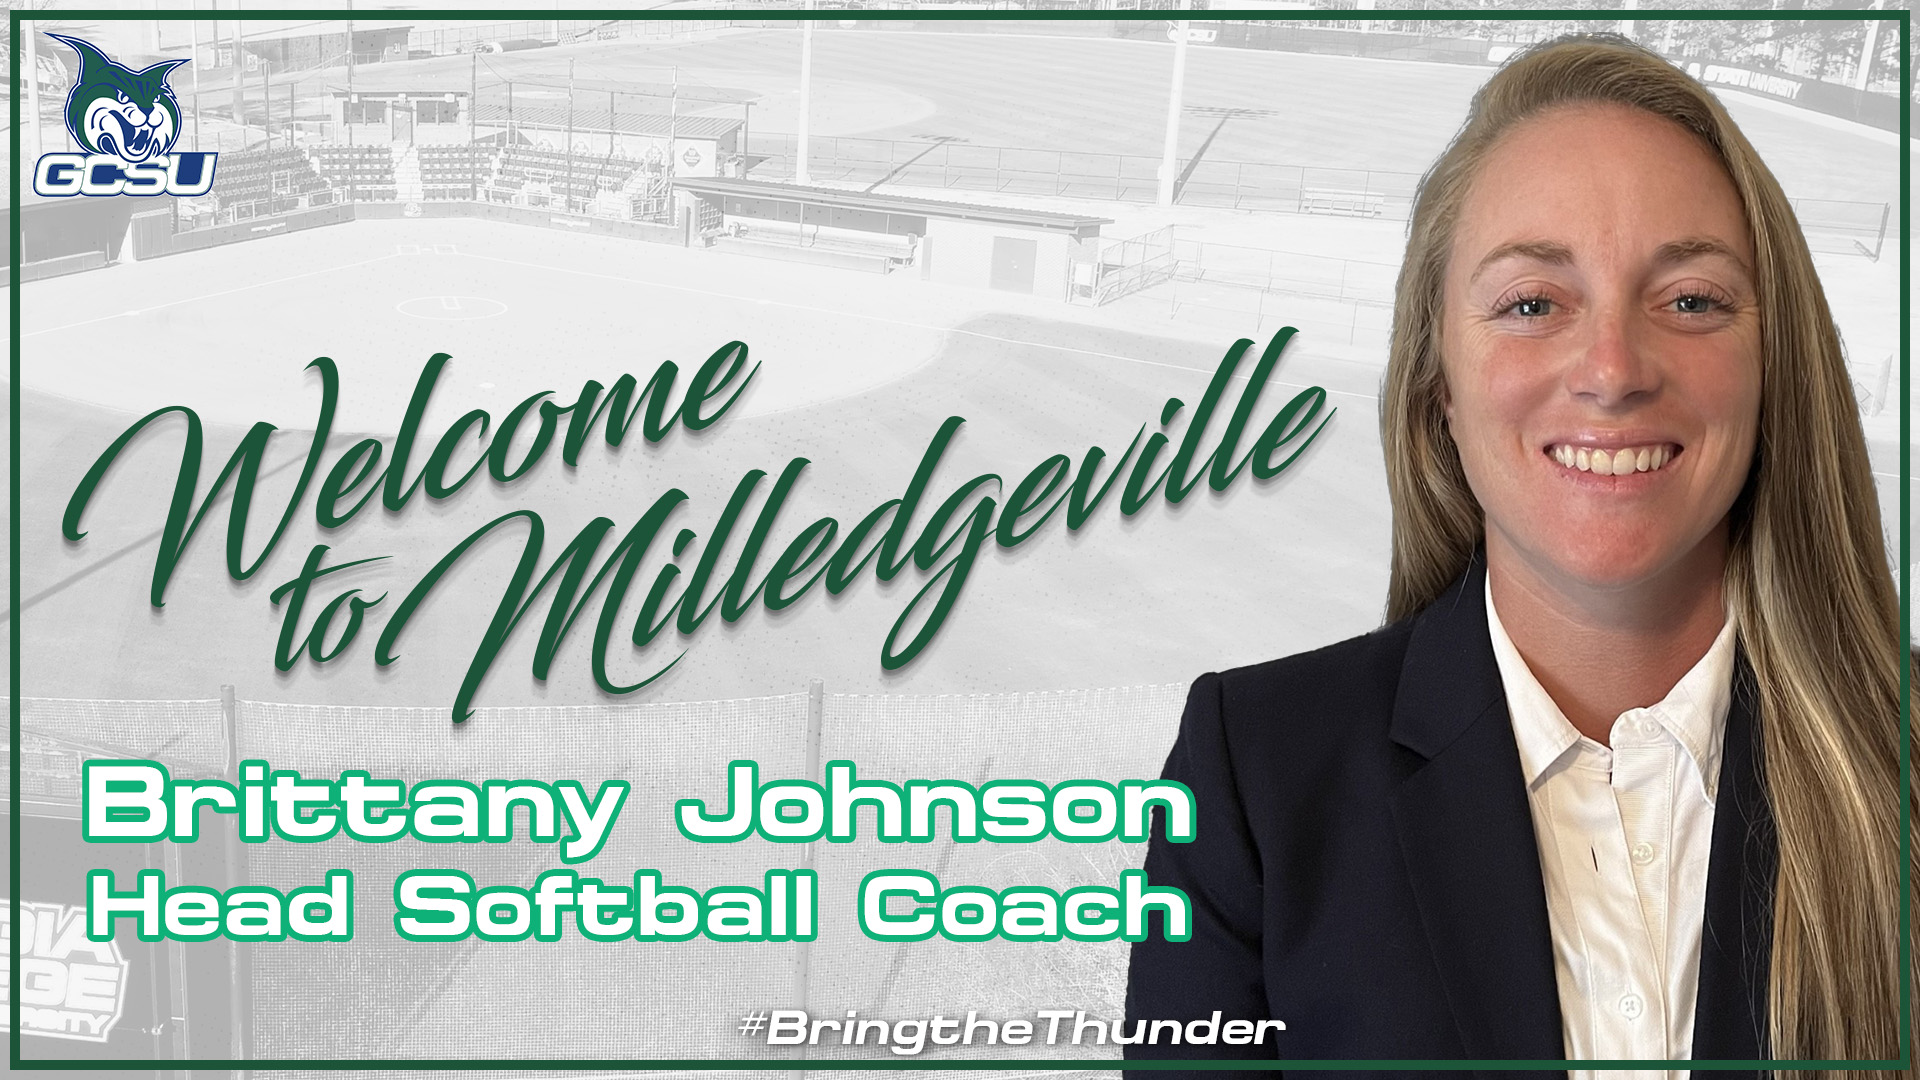 Brittany Johnson named GCSU Softball Coach